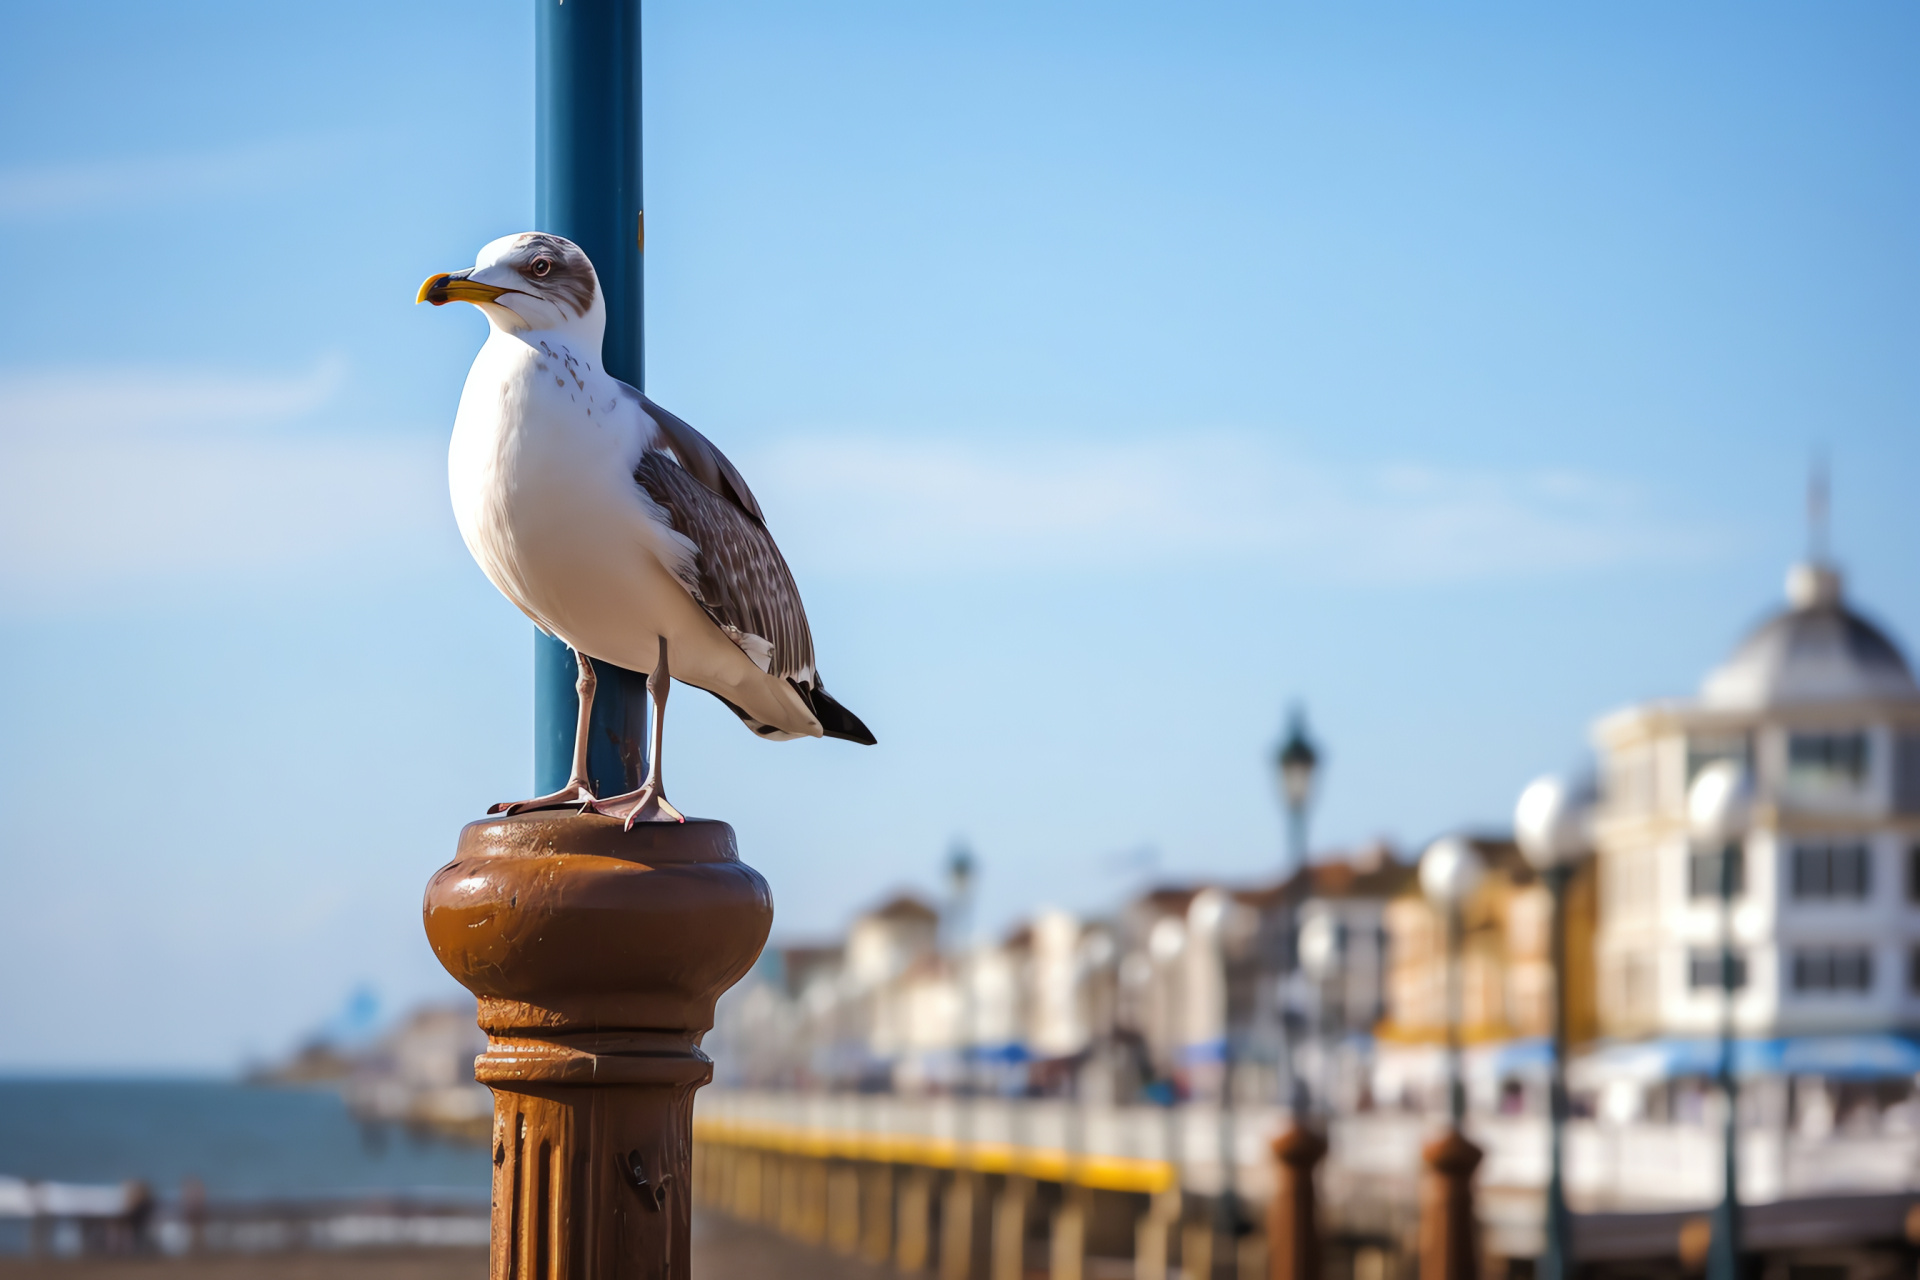 Urban seagull, Feathered town dweller, Waterfront bird, Seaside avian, Lamp post perch, HD Desktop Image